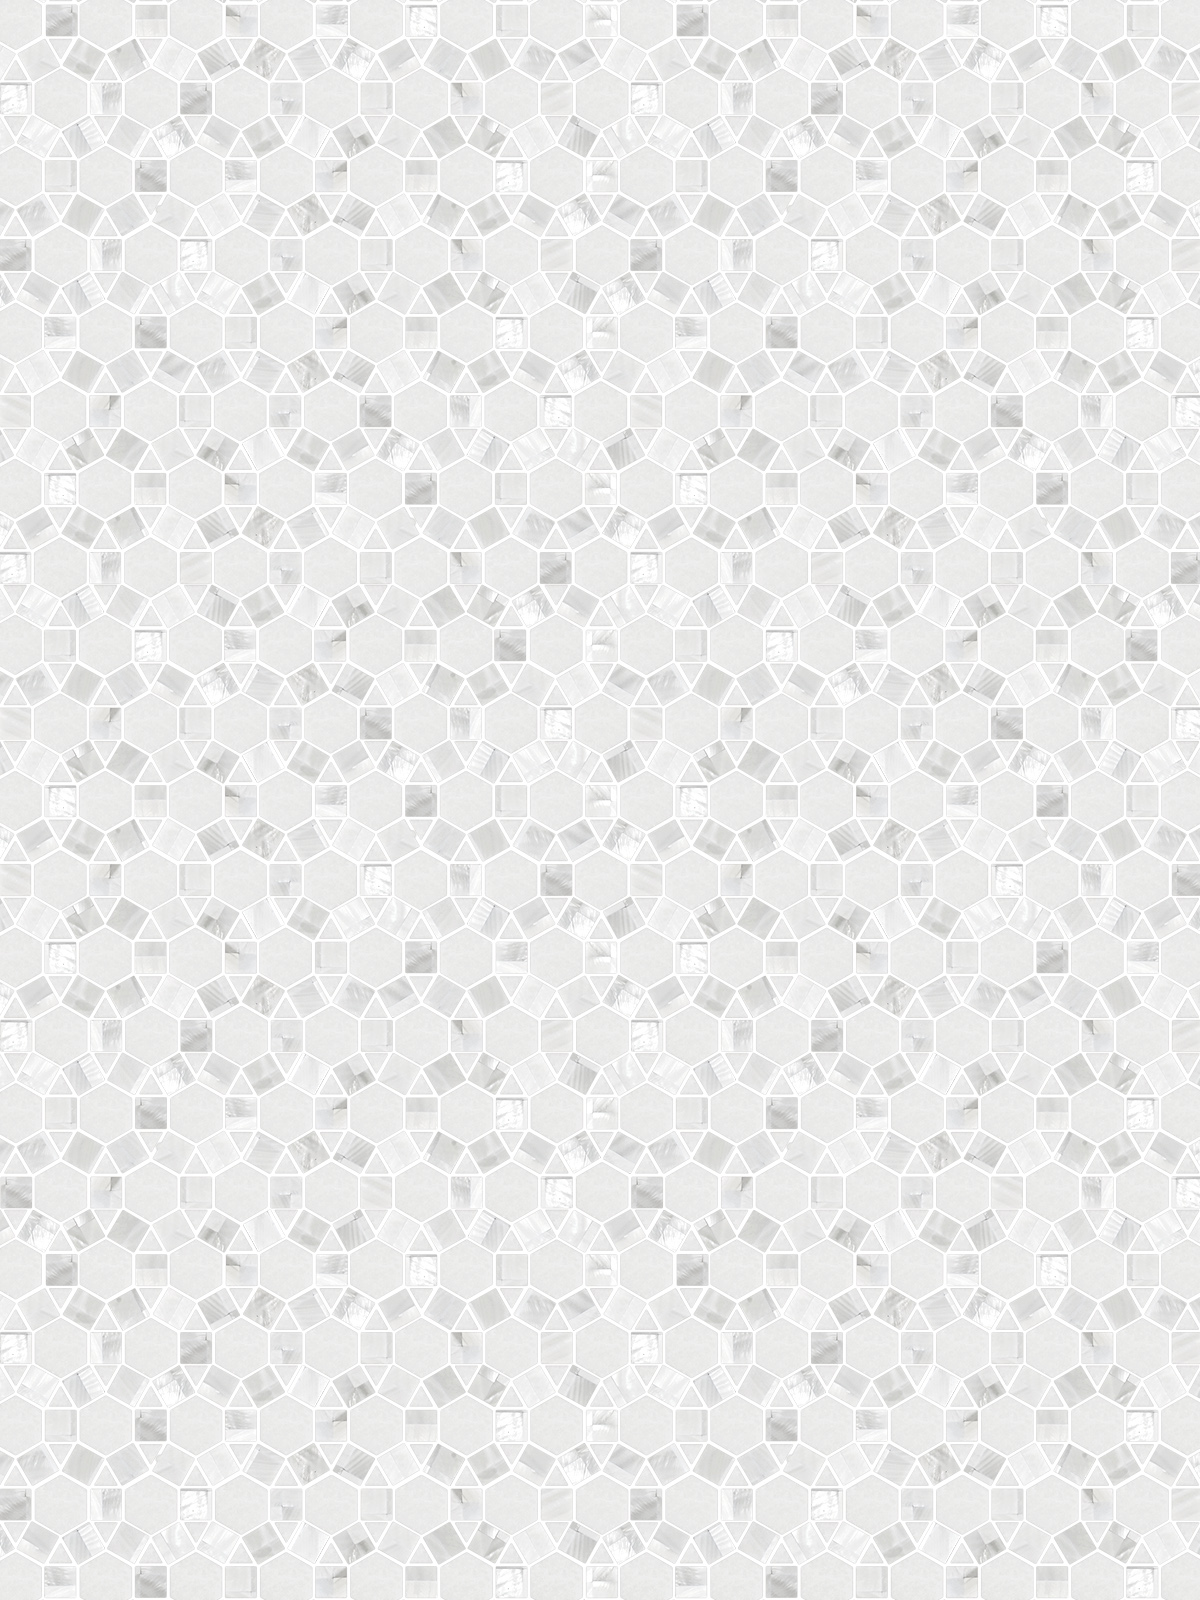 Pearl White Marble Mosaic Backsplash Tile BA7002 5